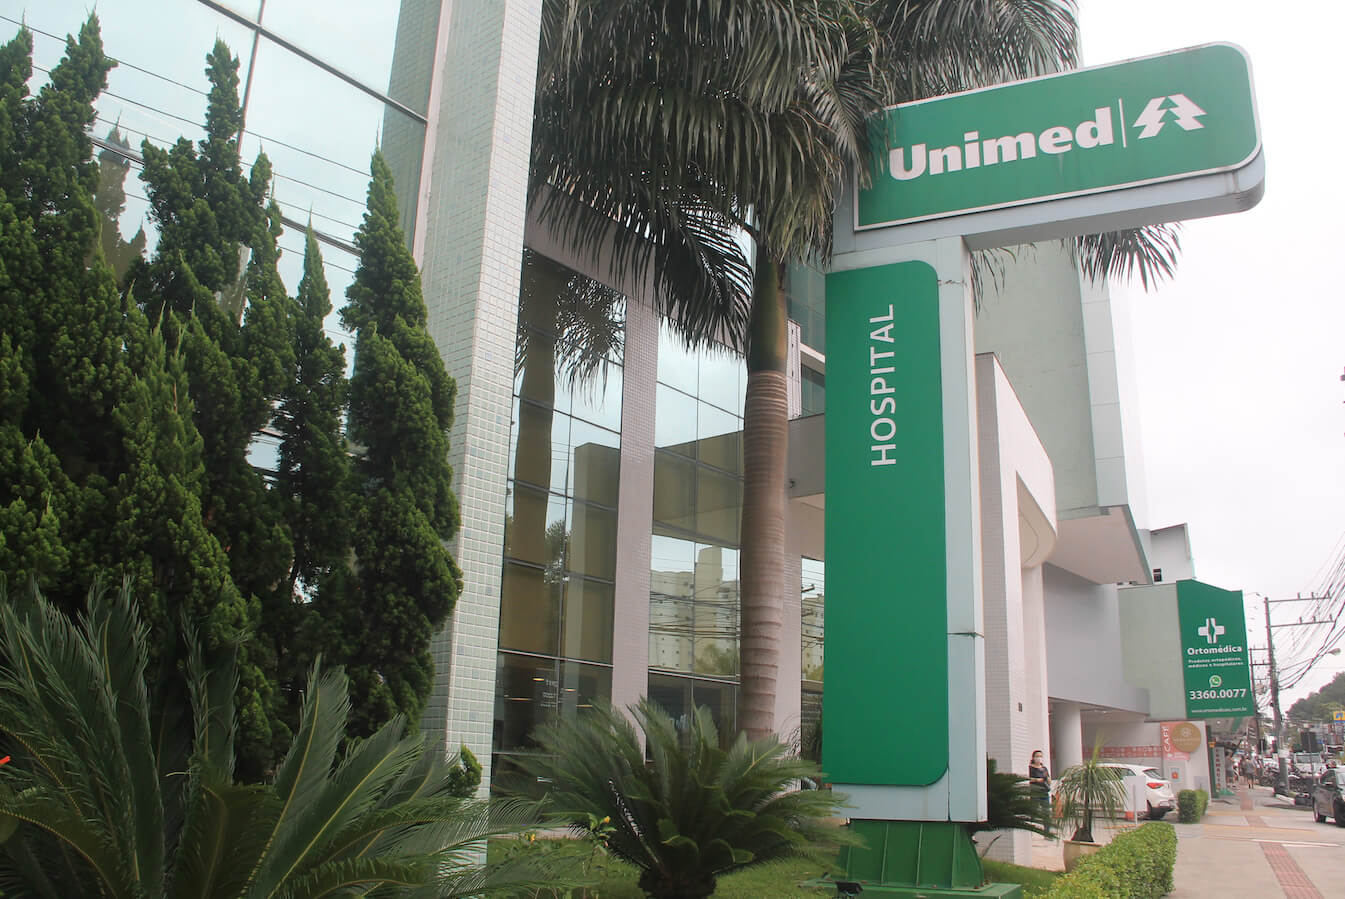 Unimed está recebendo propostas para patrocínio de projetos artísticos e culturais